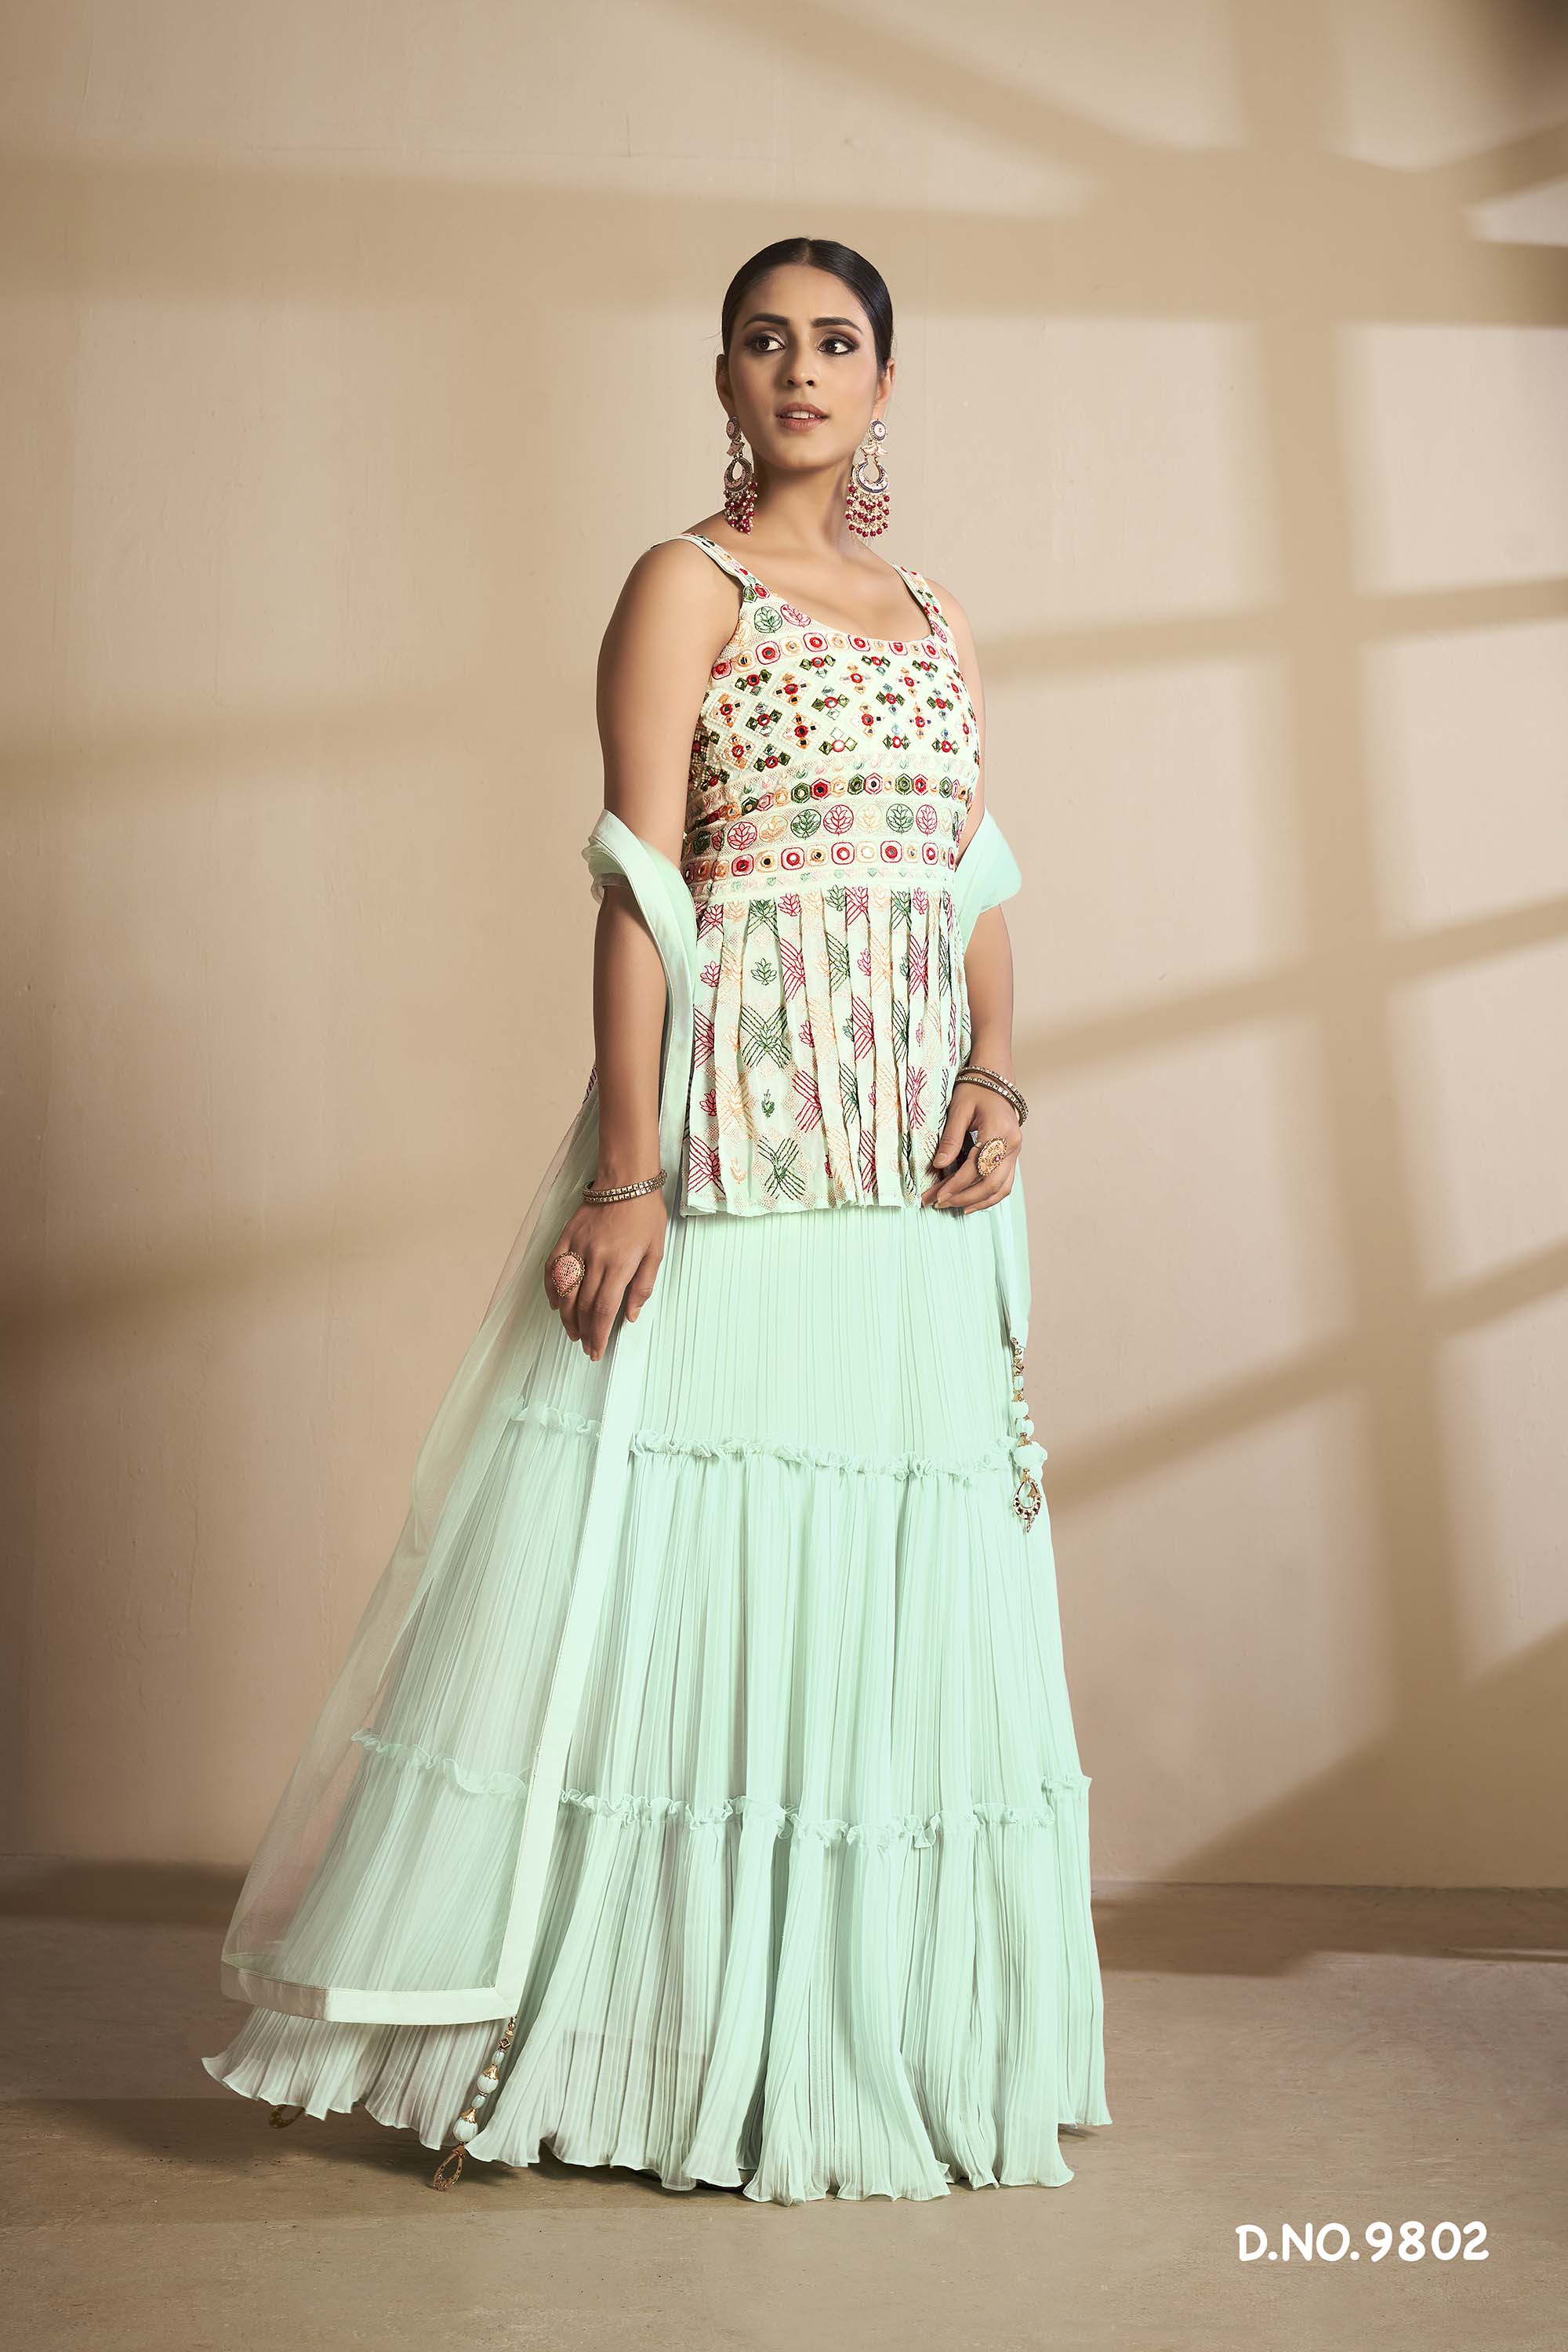 Pink And Blue Lacha Suit Lengha Choli Lehenga Lehanga Indian Sari Saree  Dress | eBay